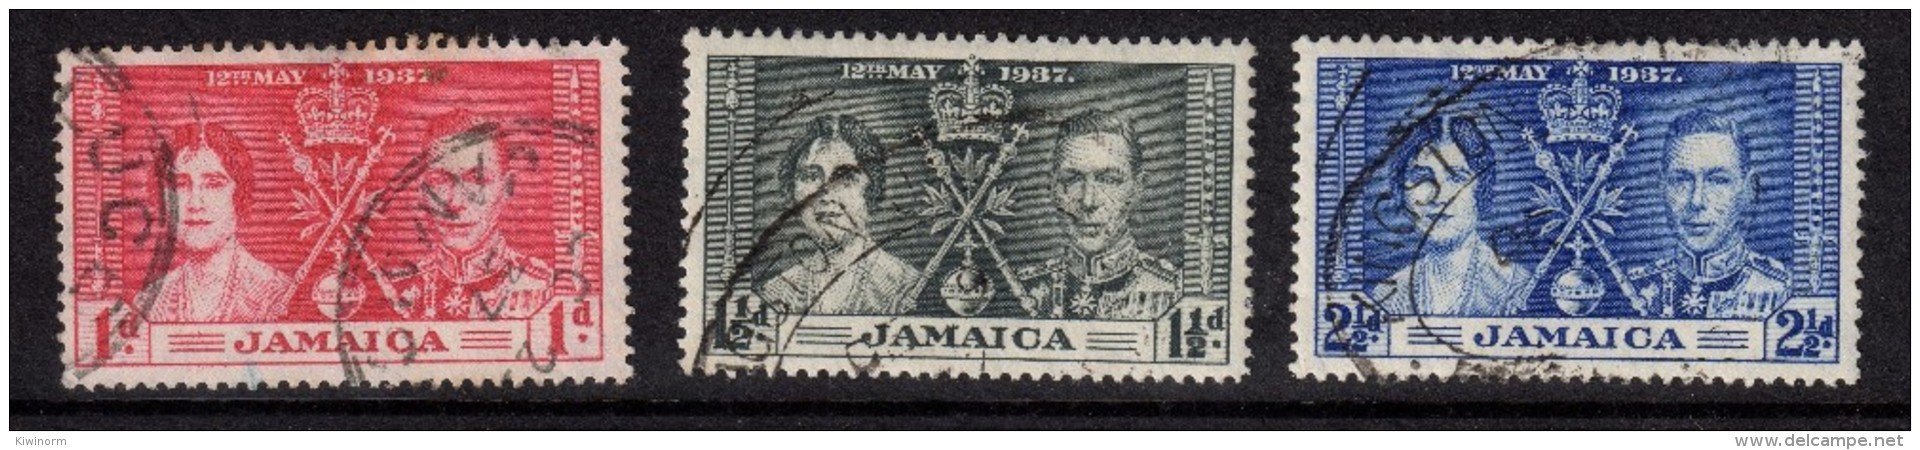 JAMAICA 1937 Coronation Omnibus  Set - Very Fine Used - VFU - 5B823 - Jamaica (...-1961)